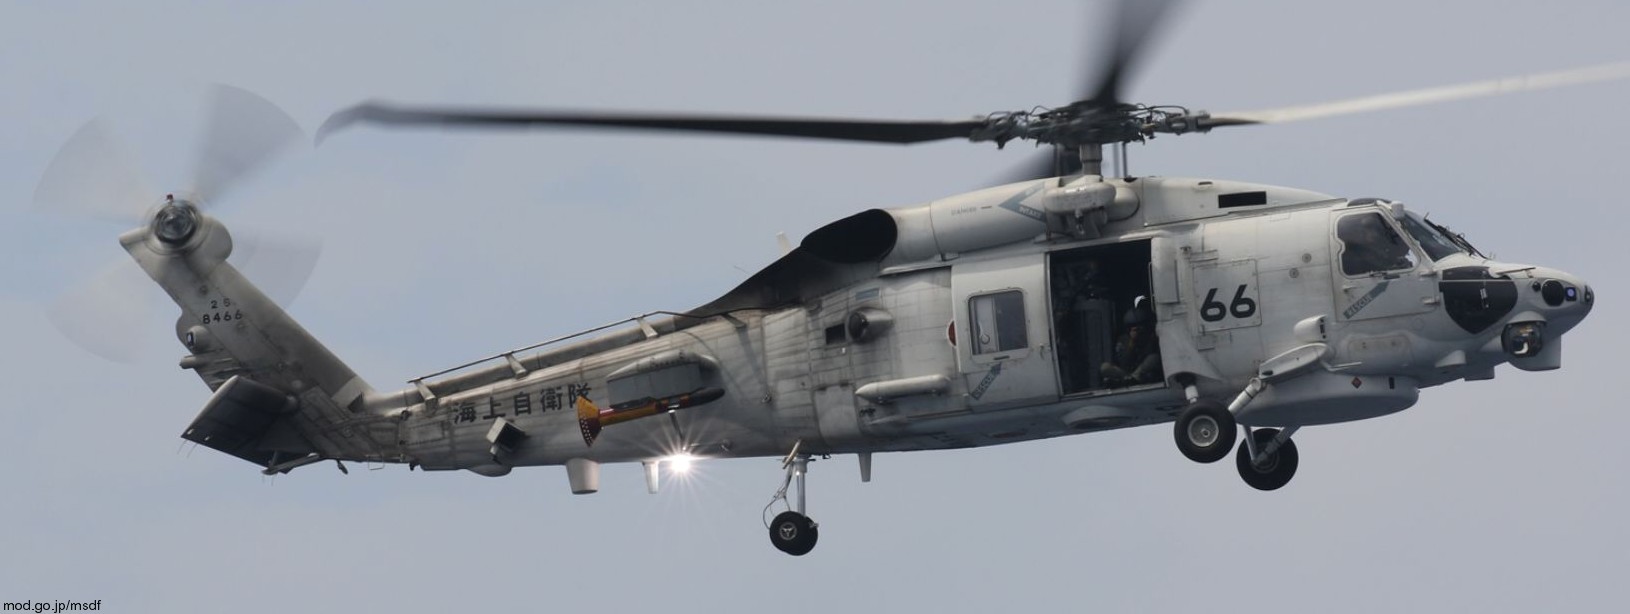 mitsubishi sh-60k helicopter anti submarine japan maritime self defense force jmsdf navy seahawk 8466 02